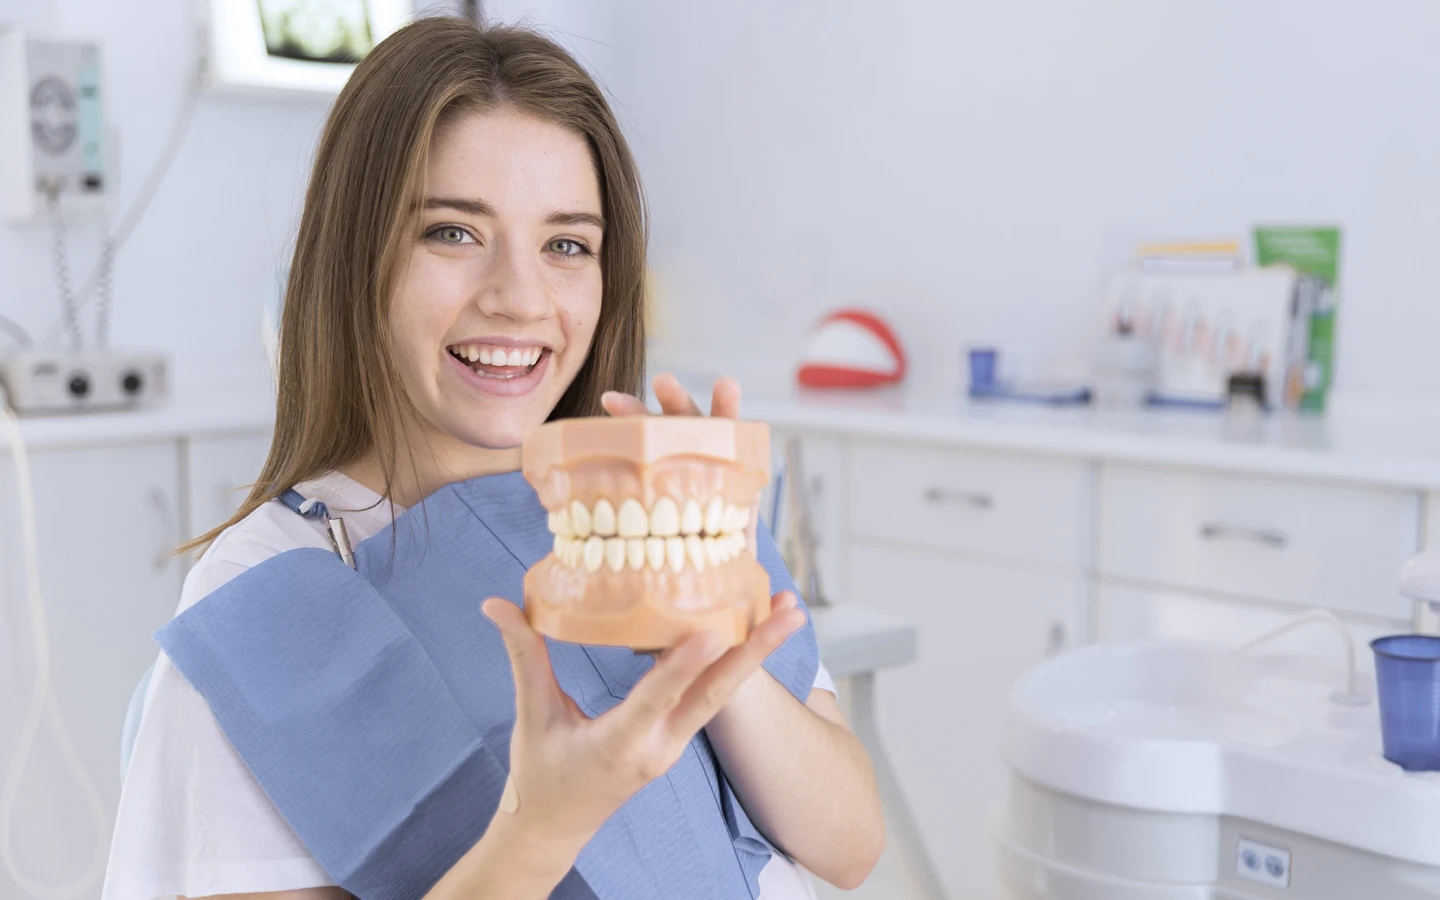 Replacing teeth with dentures